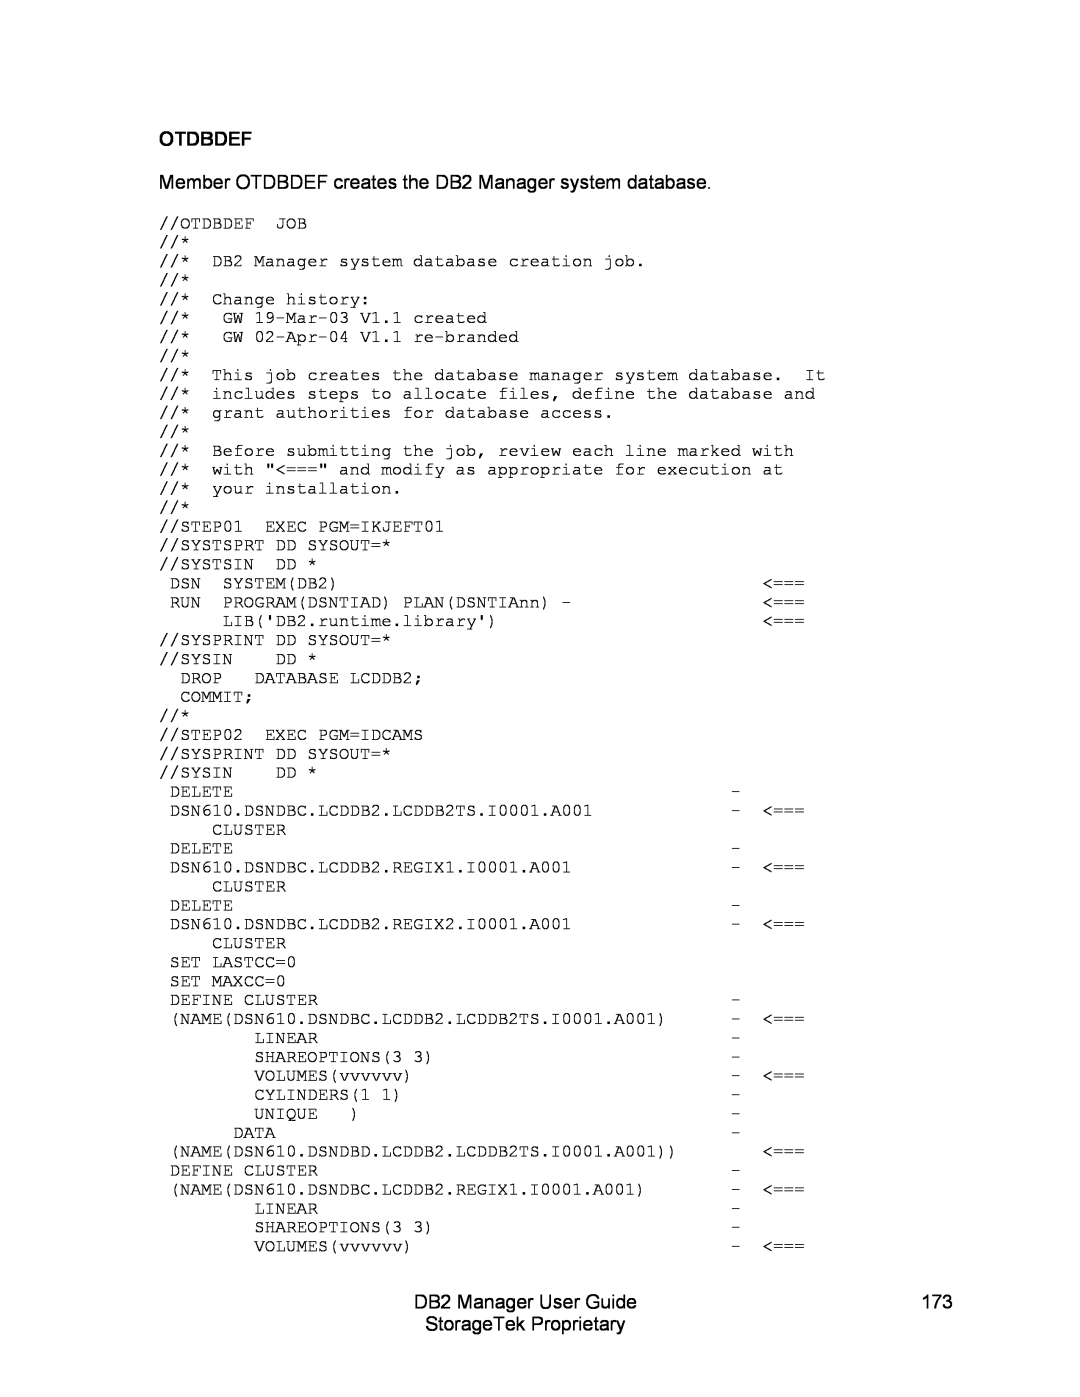 StorageTek 312564001 manual Otdbdef, DB2 Manager User Guide, StorageTek Proprietary 